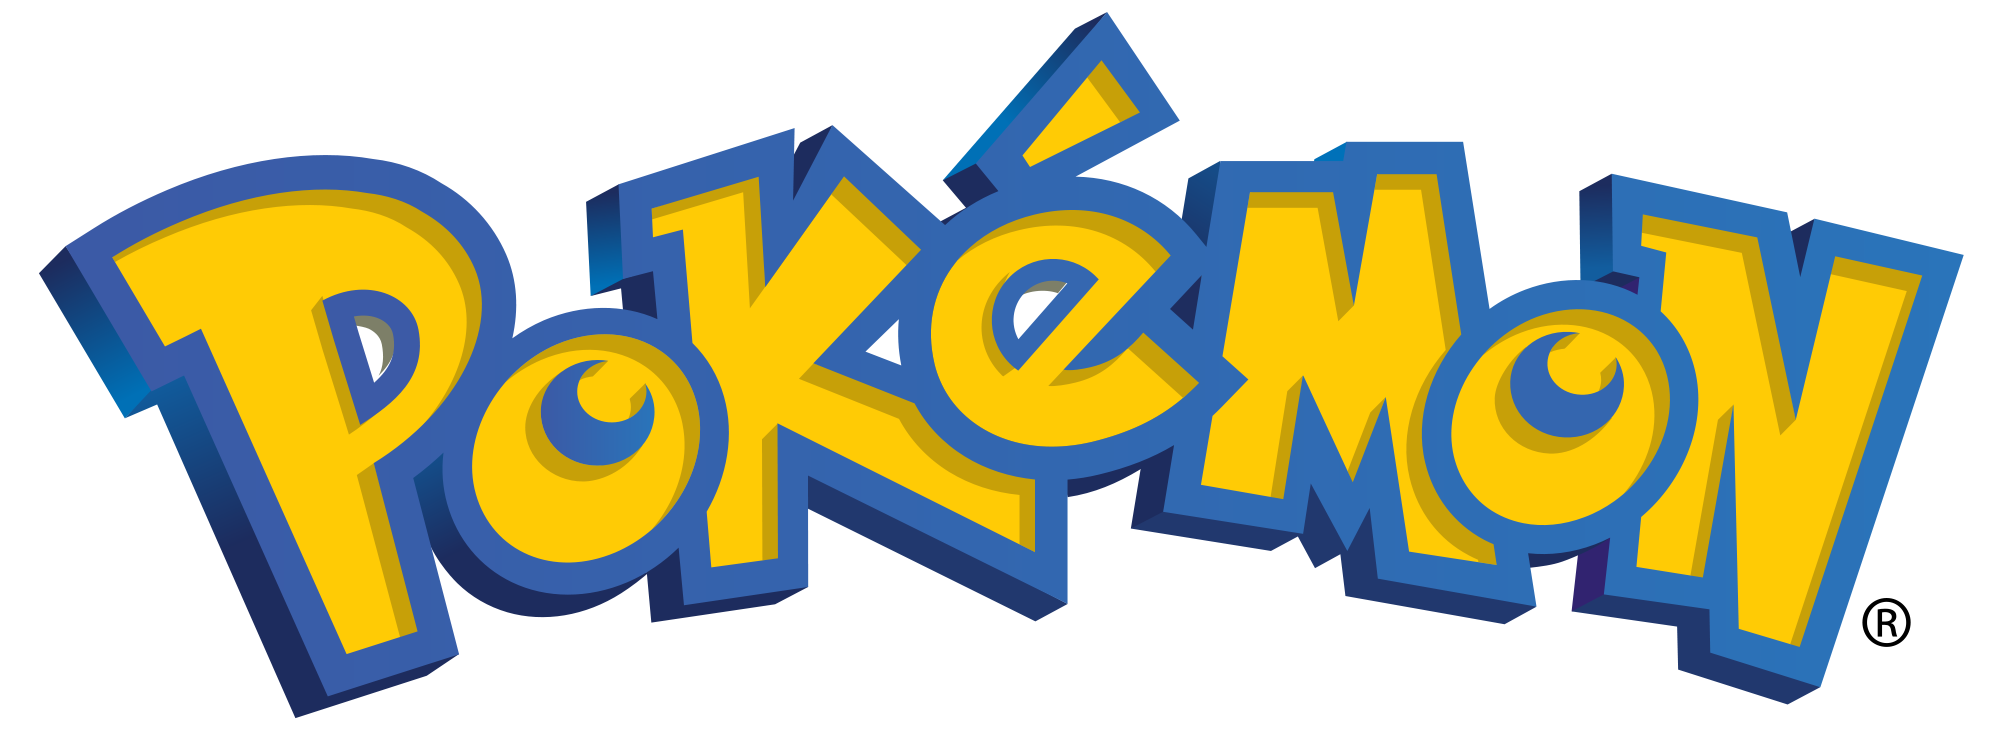 Pokemon_Logo